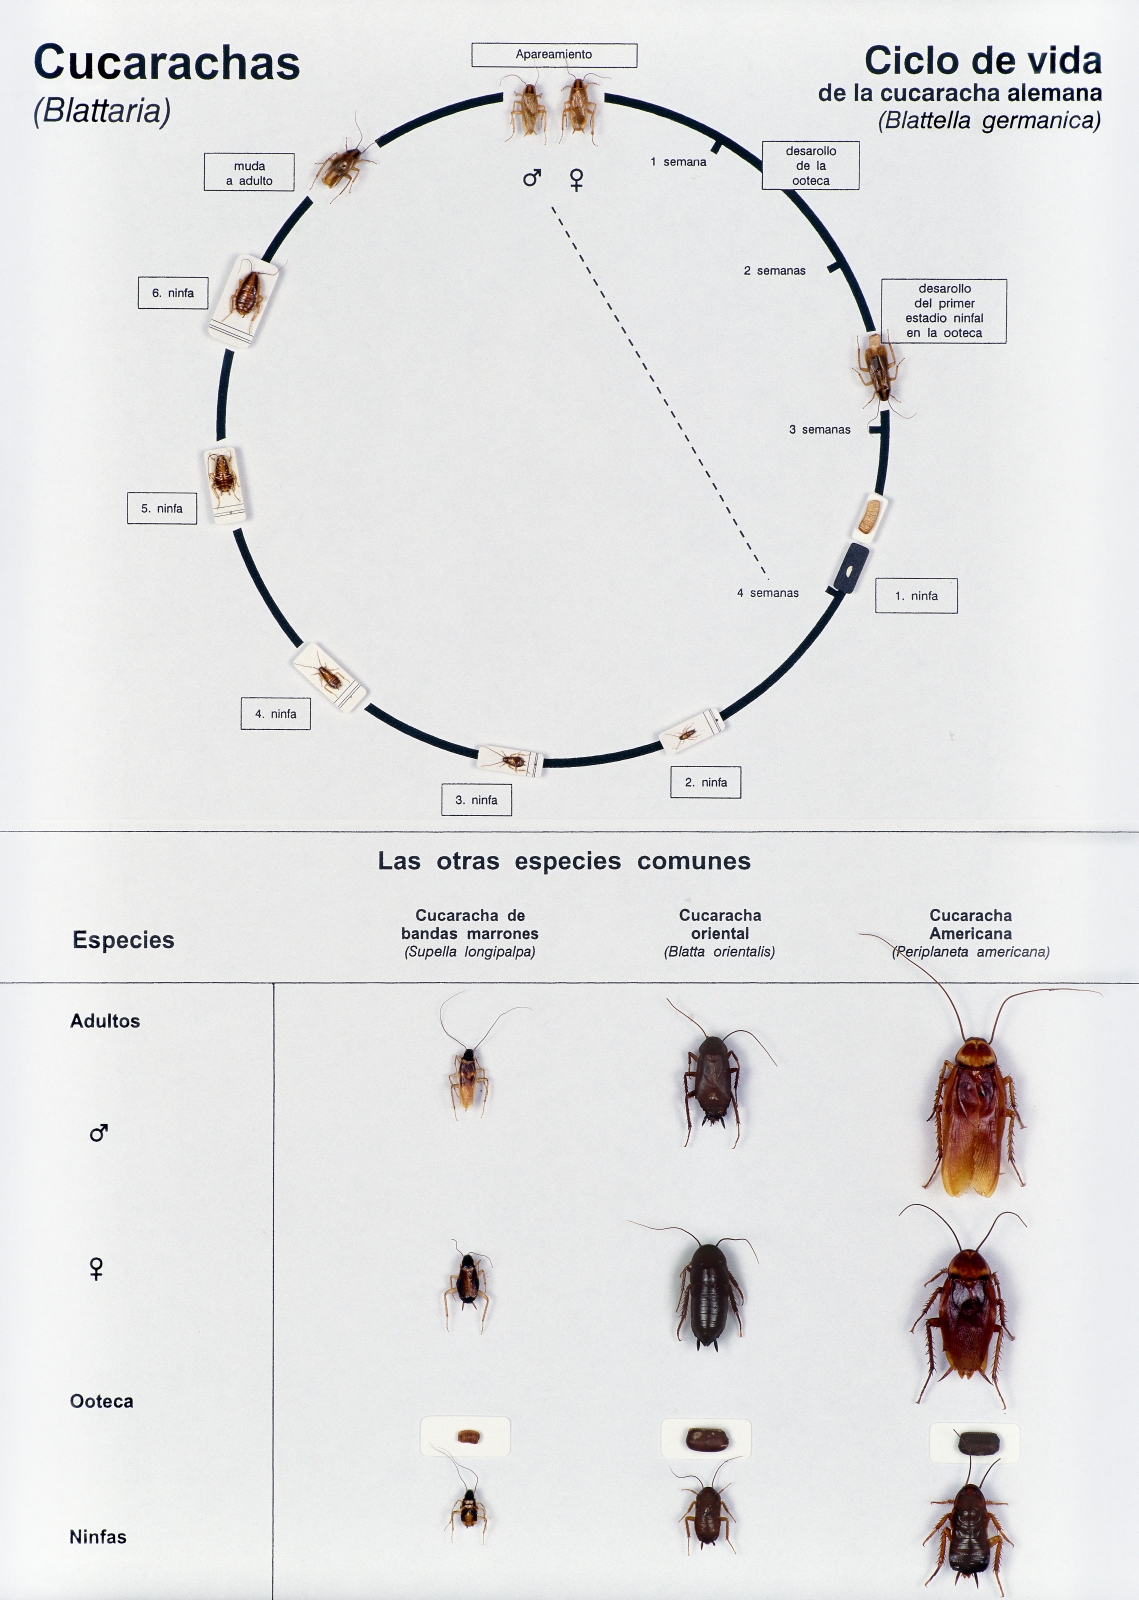 El ciclo de vida de la cucaracha americana